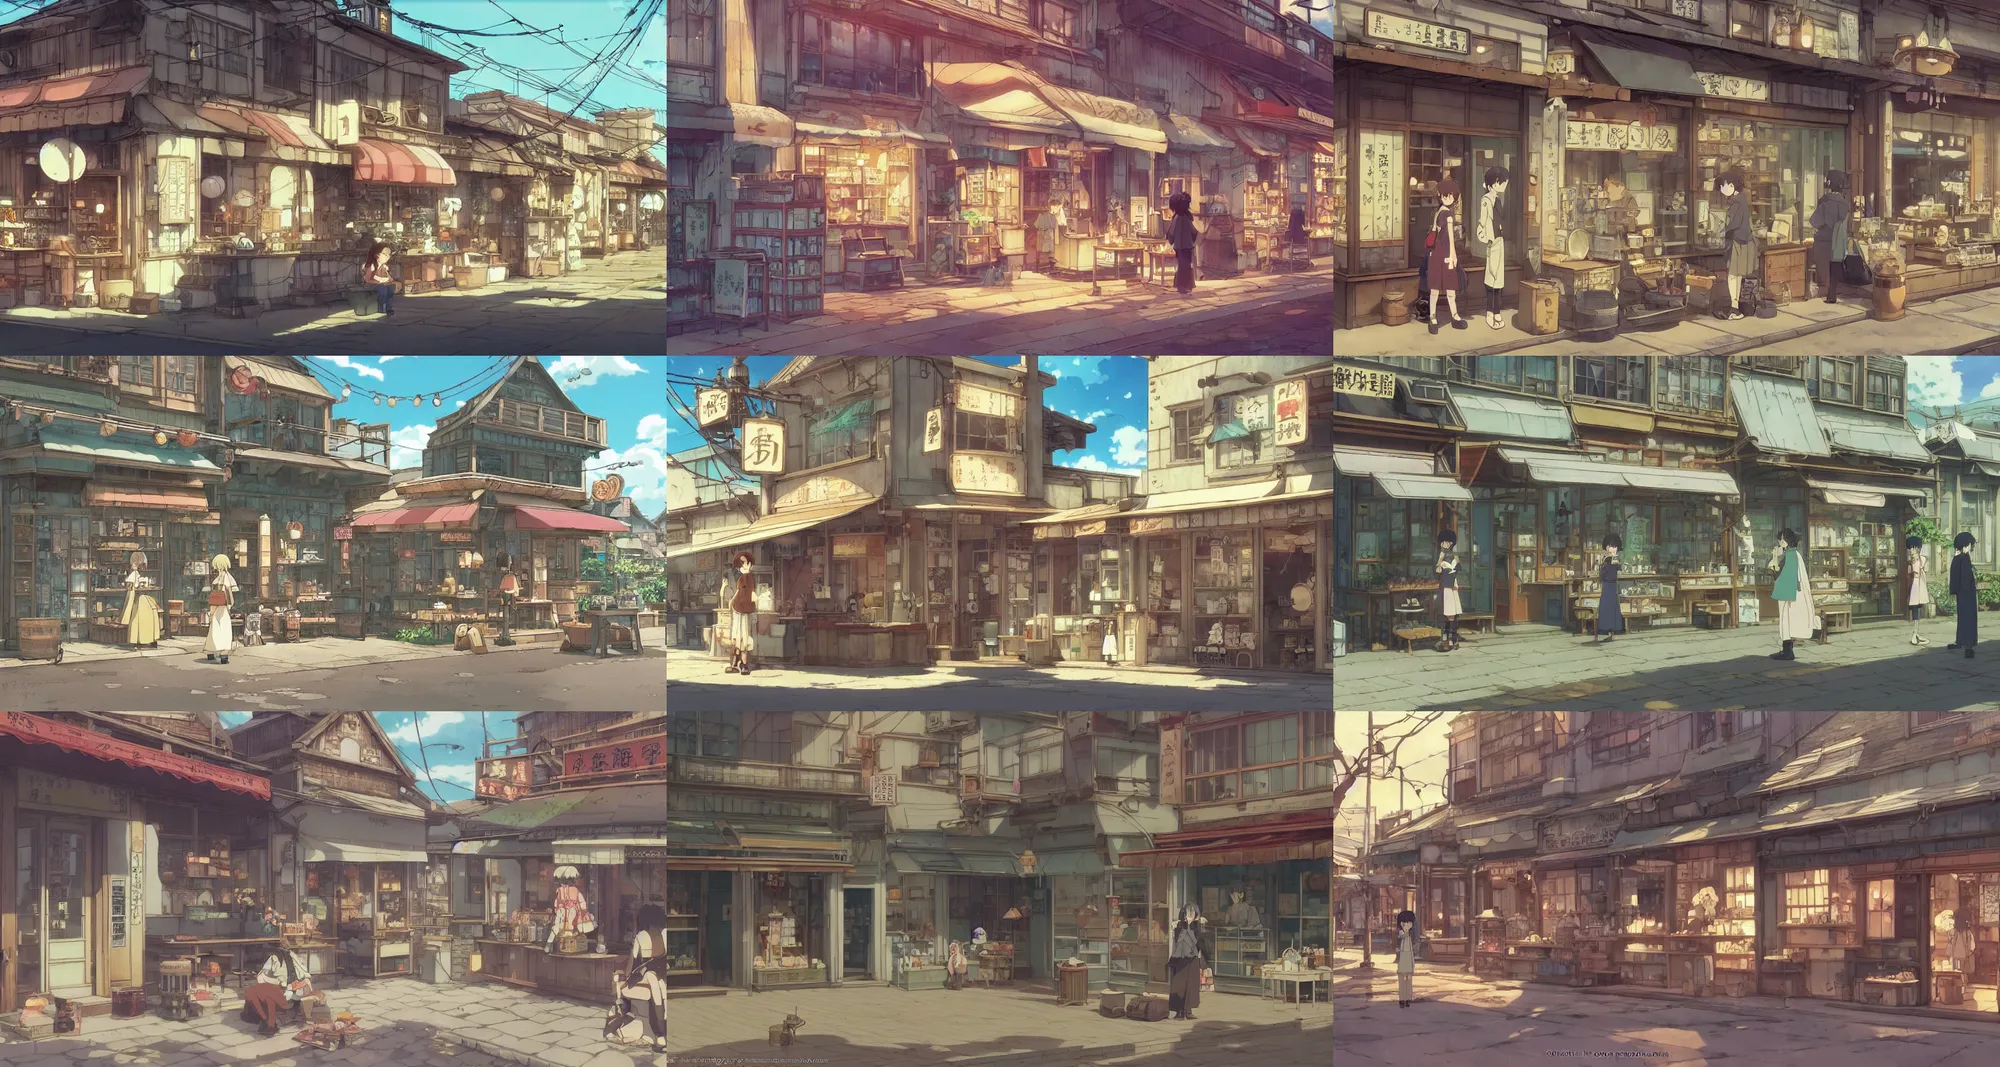 Prompt: beautiful slice of life anime scene of rural steampunk storefront, relaxing, calm, cozy, peaceful, by mamoru hosoda, hayao miyazaki, makoto shinkai